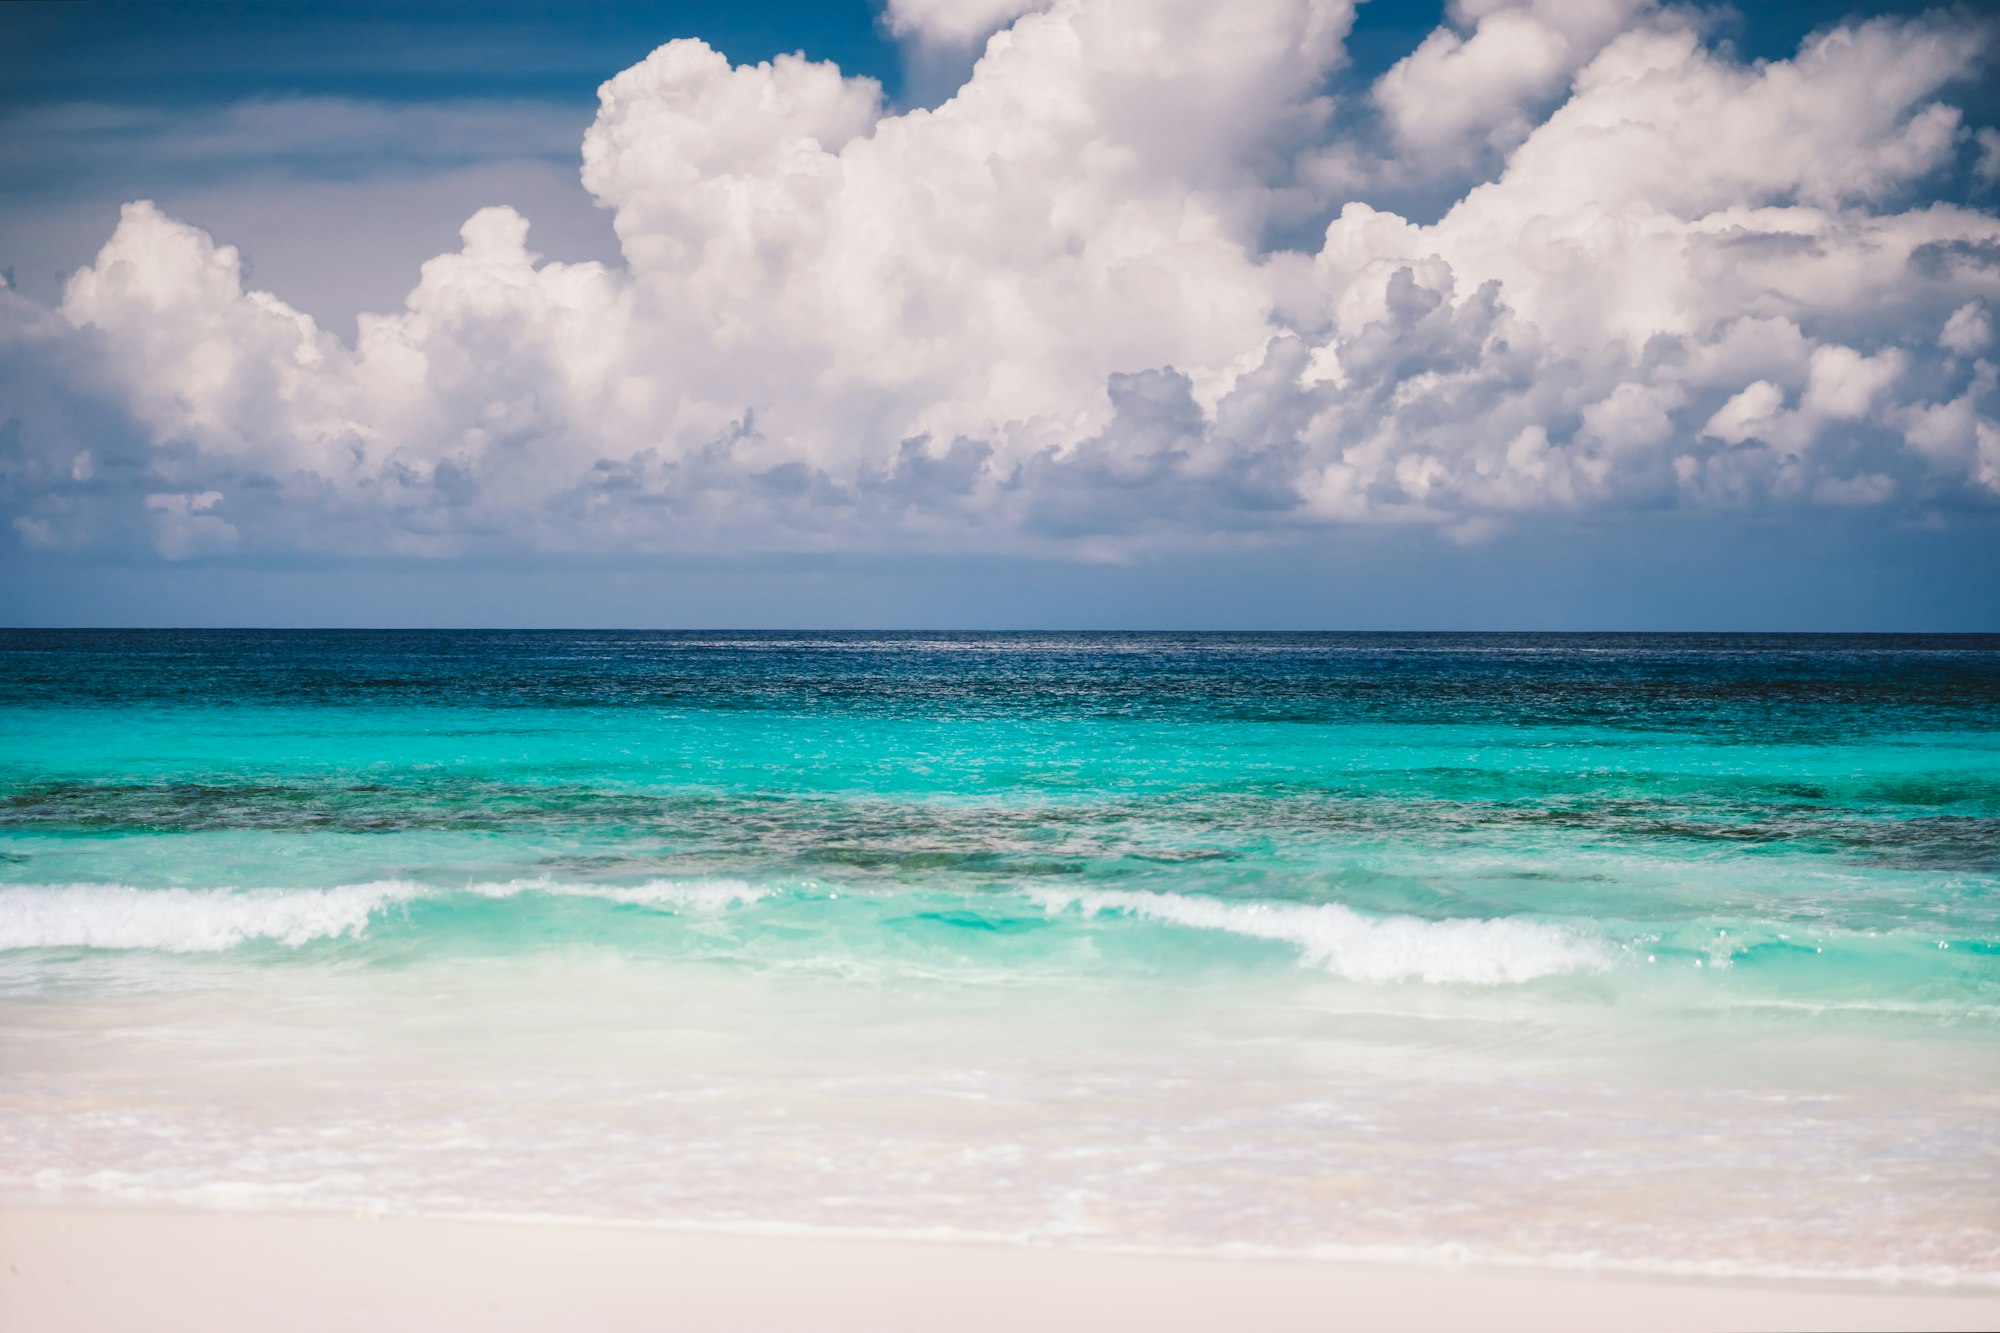 Sandy beach, blue ocean and white cloudscape at Mahe island, Seychelles